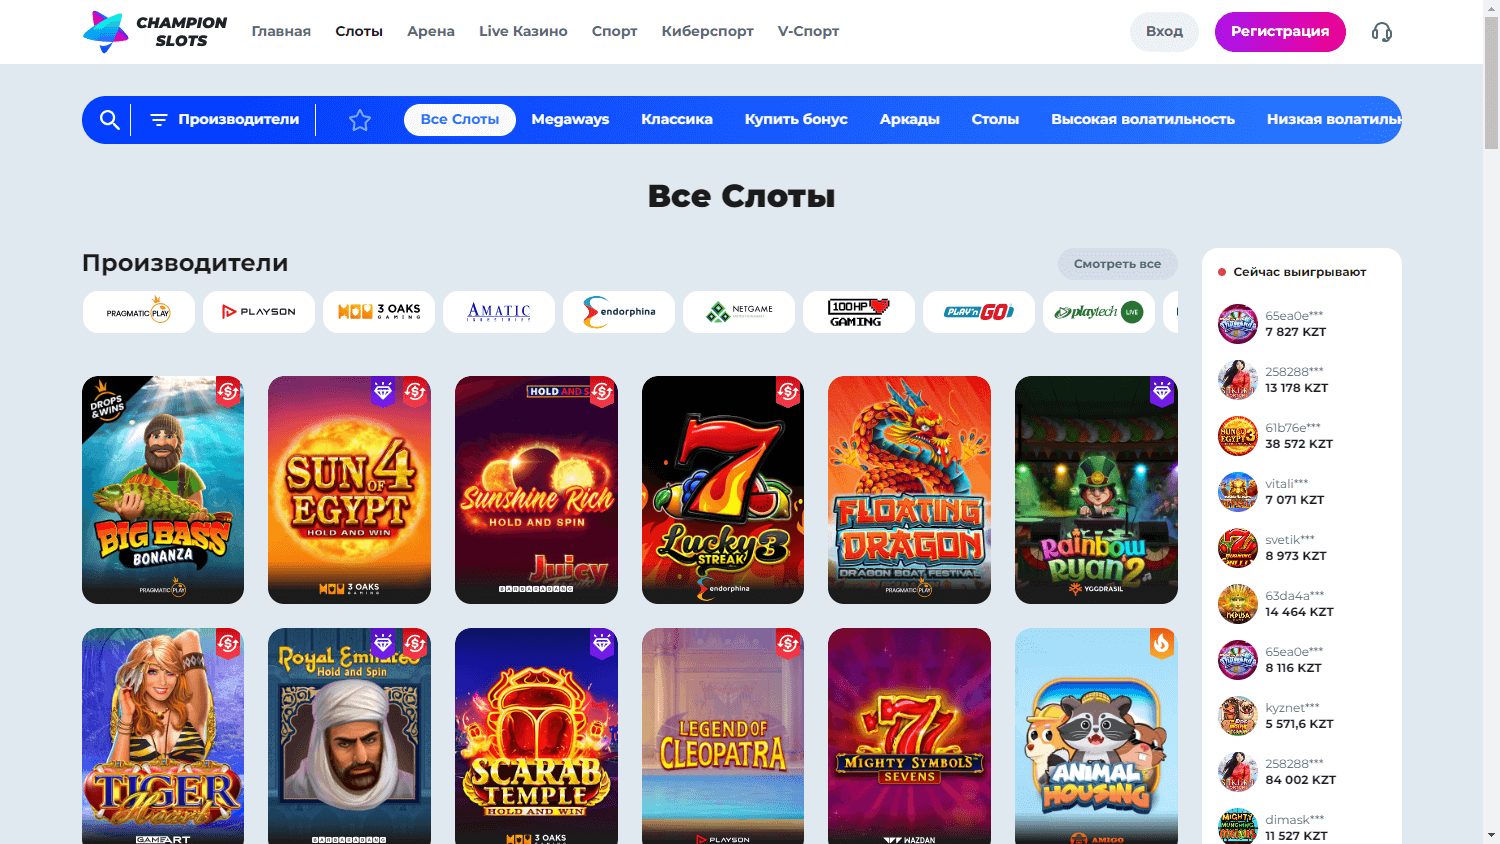 champion_slots_casino_game_gallery_desktop